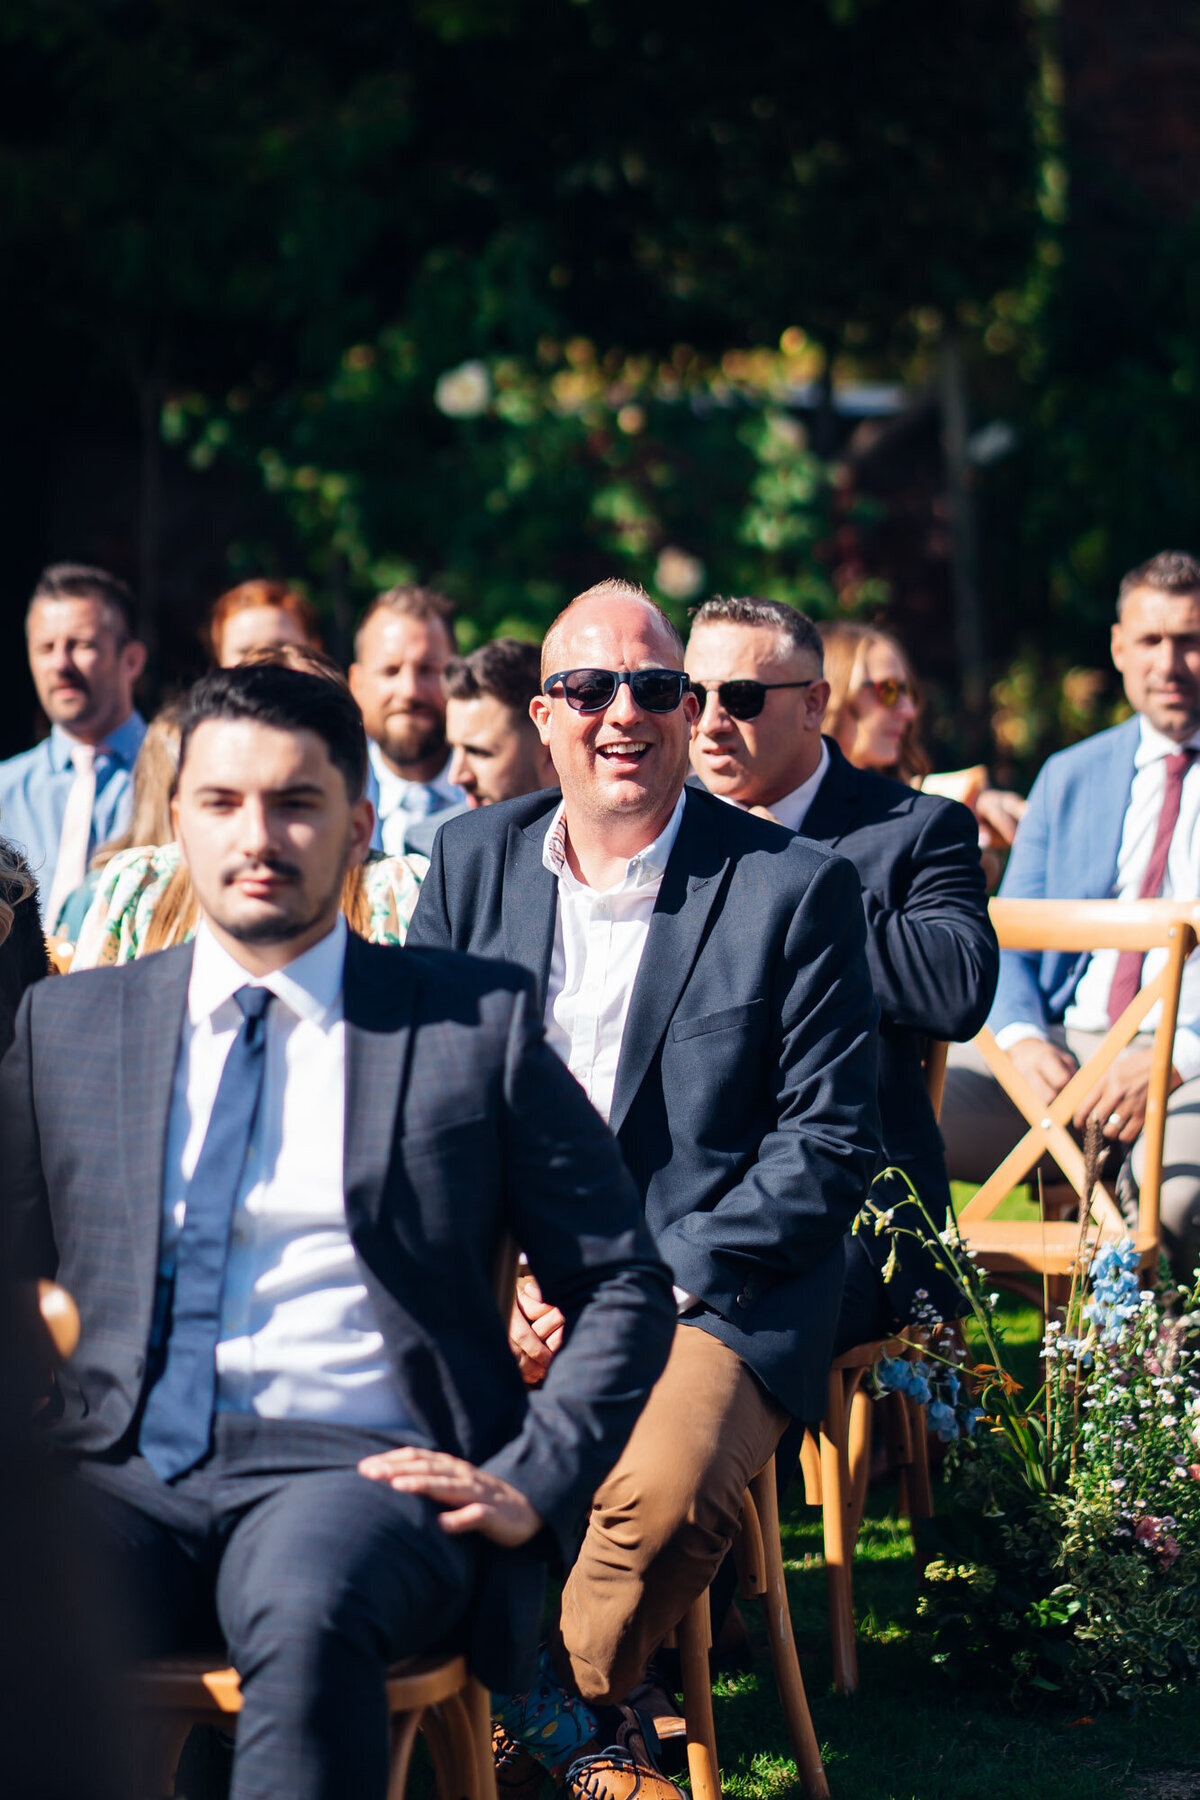 Pauntley-court-wedding-photographer-guests-during-outdoor-ceremony